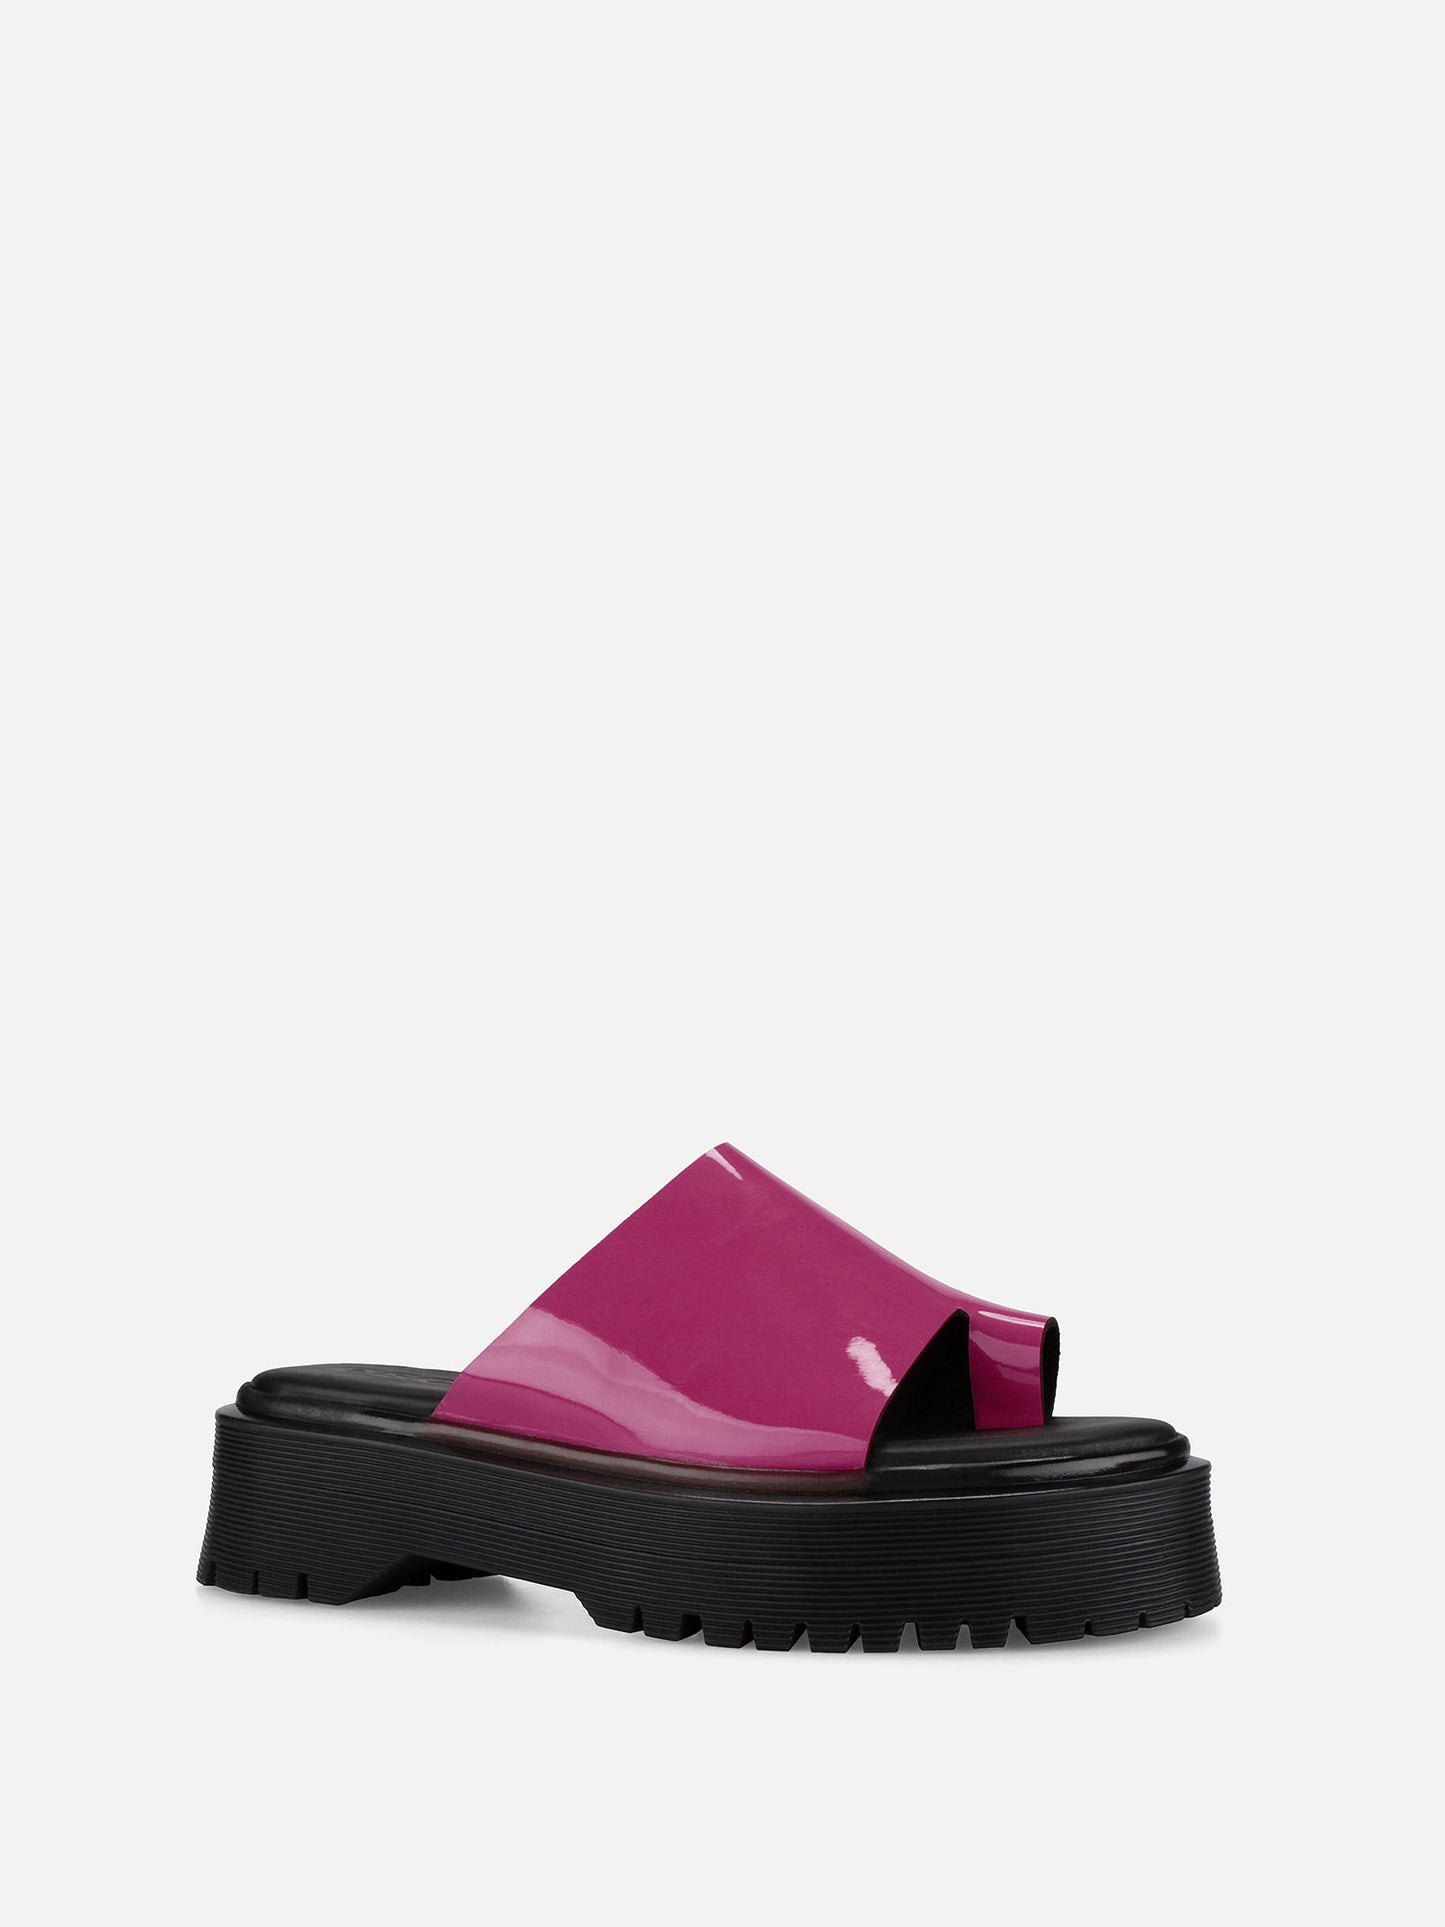 JOY Plataform Sandals - Pink